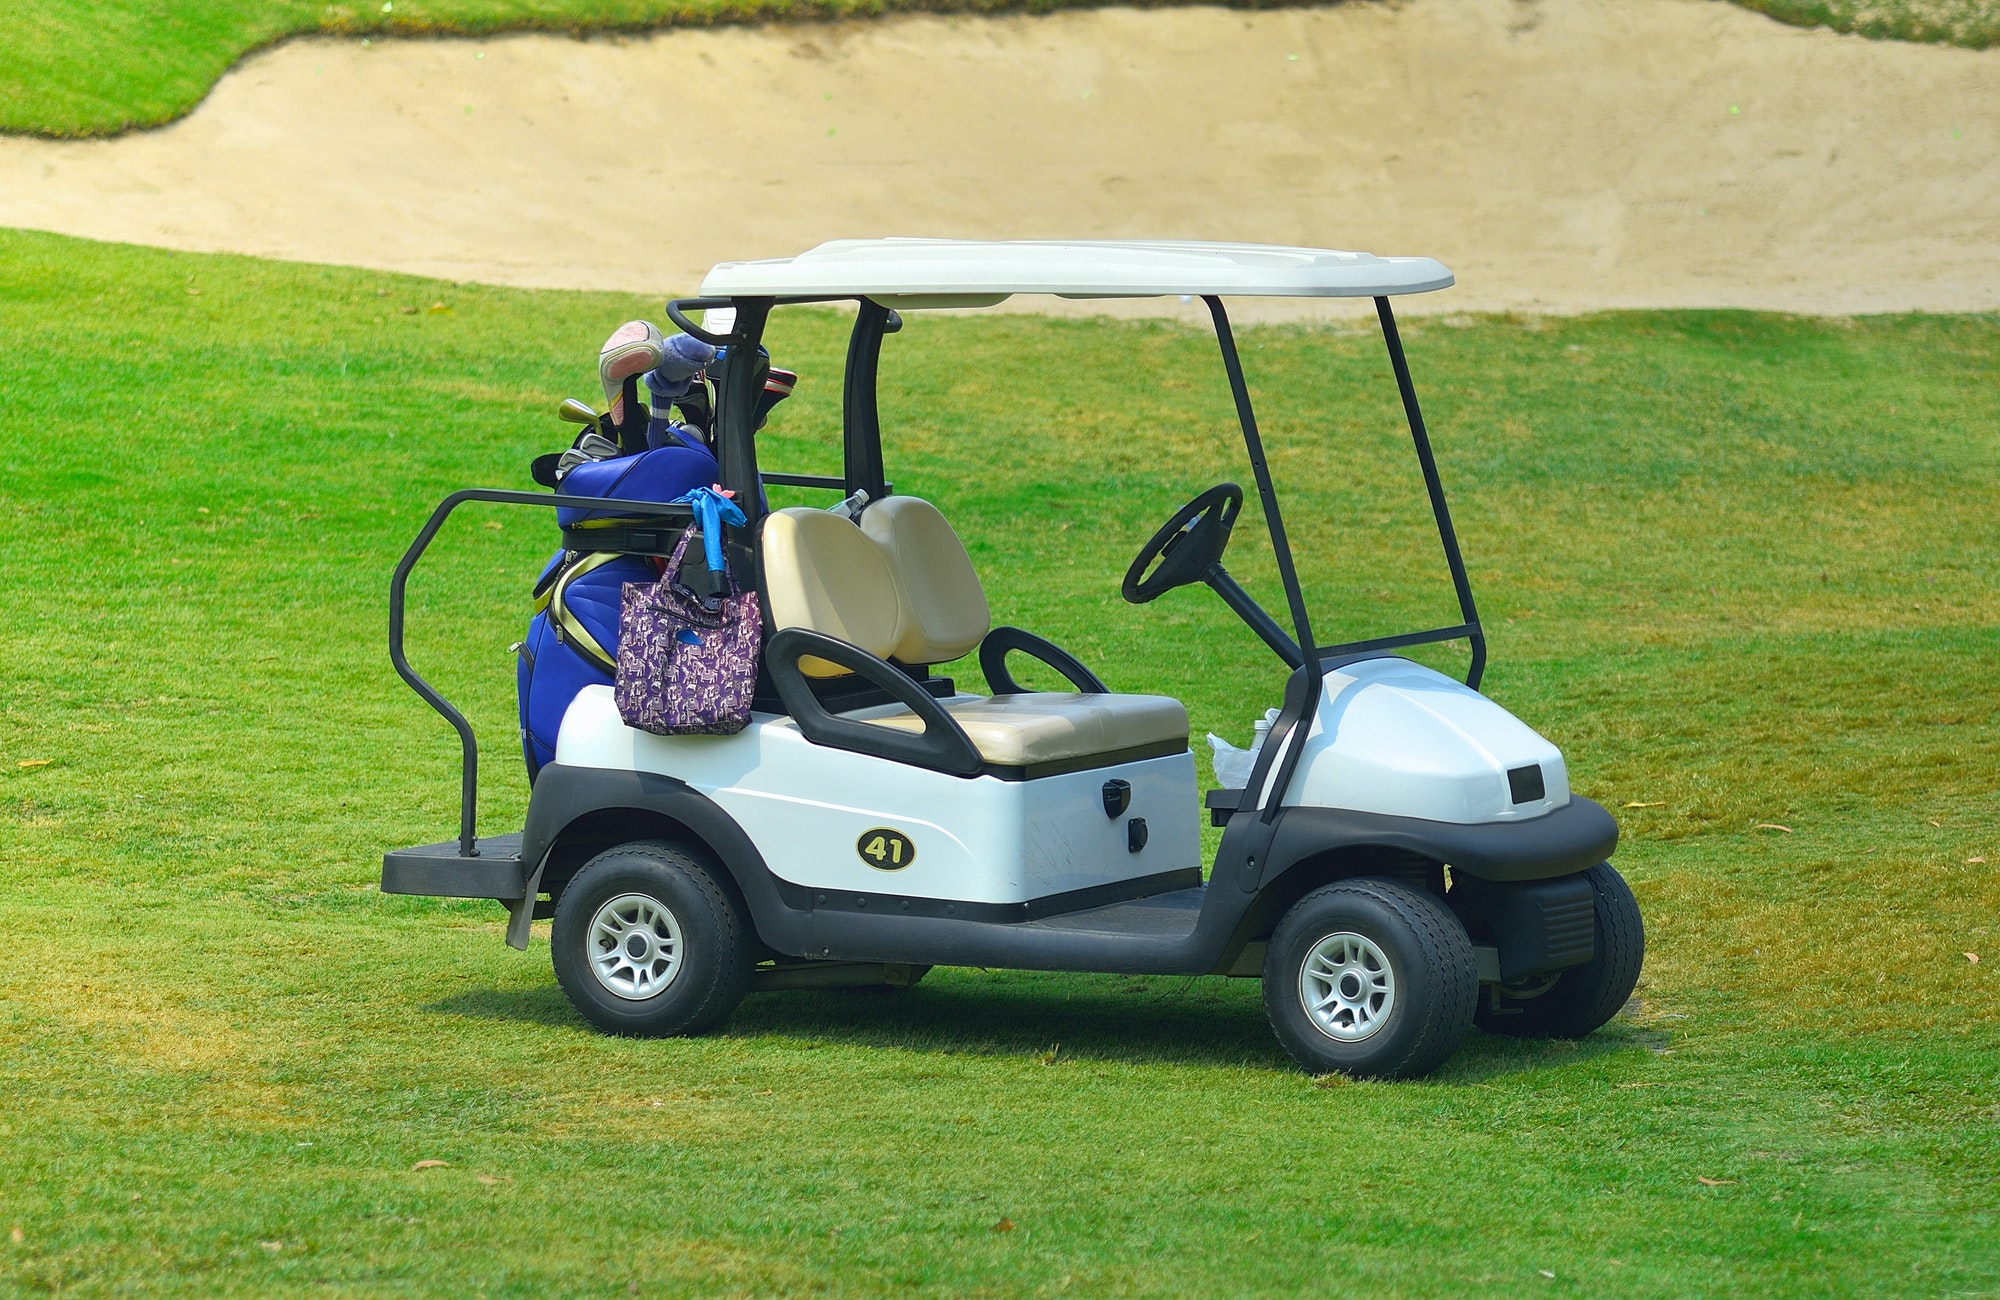 Golf carts on a golf course